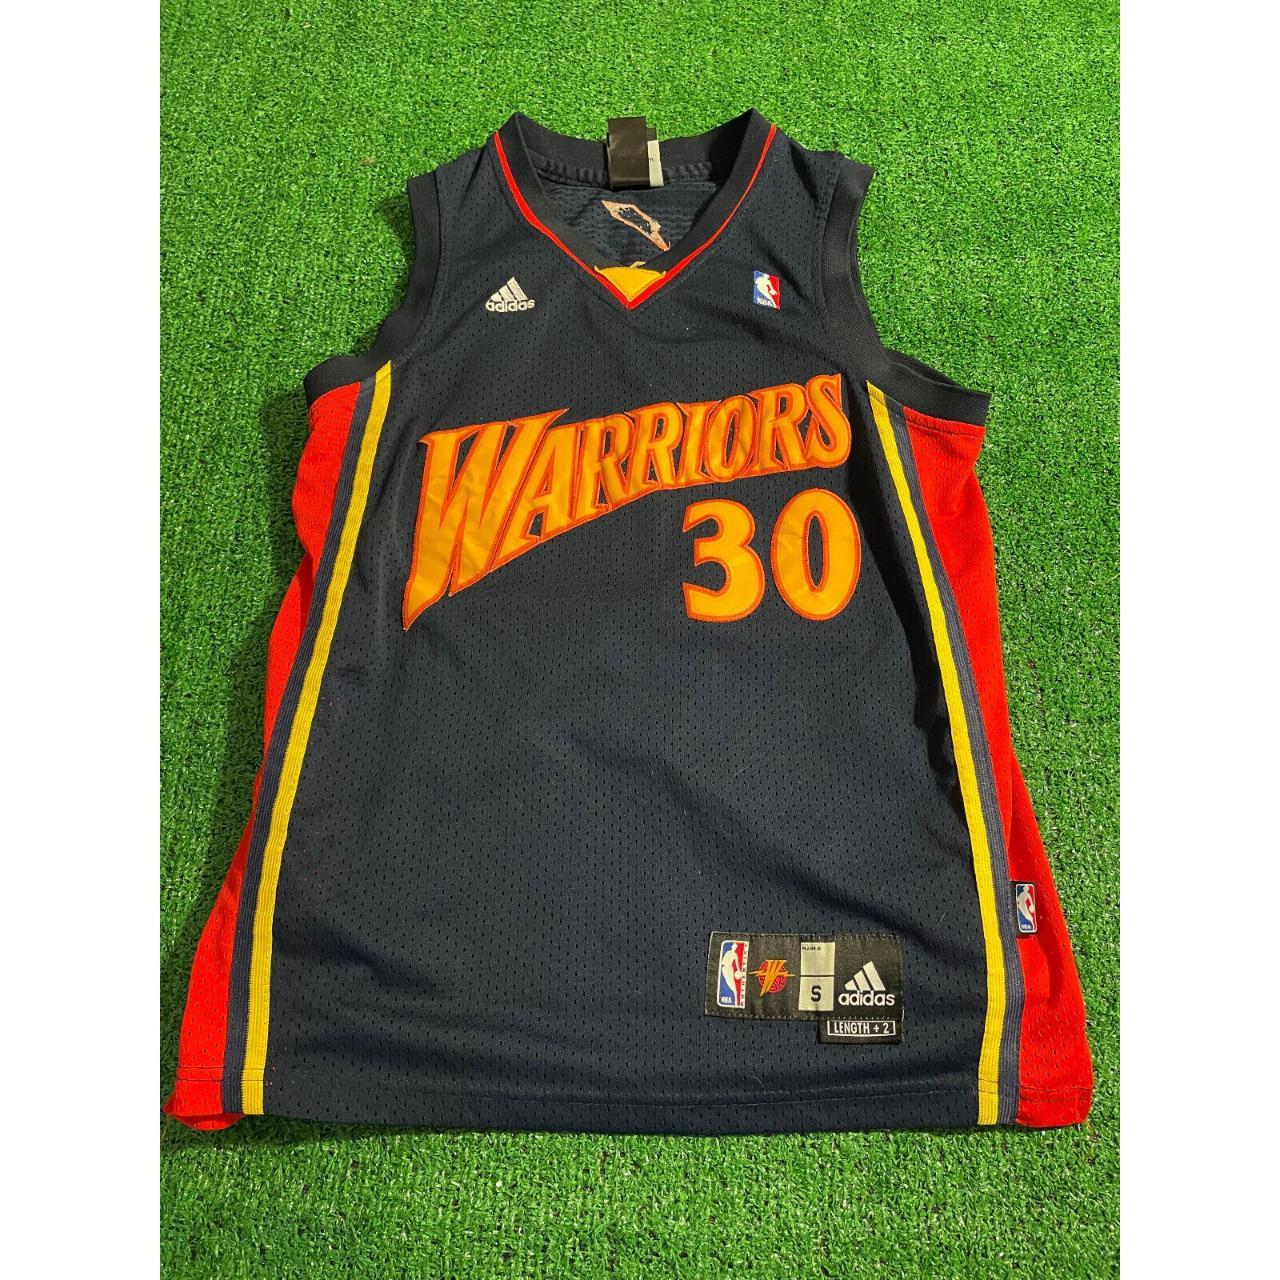 Nike Steph Curry Golden State Warriors NBA - Depop